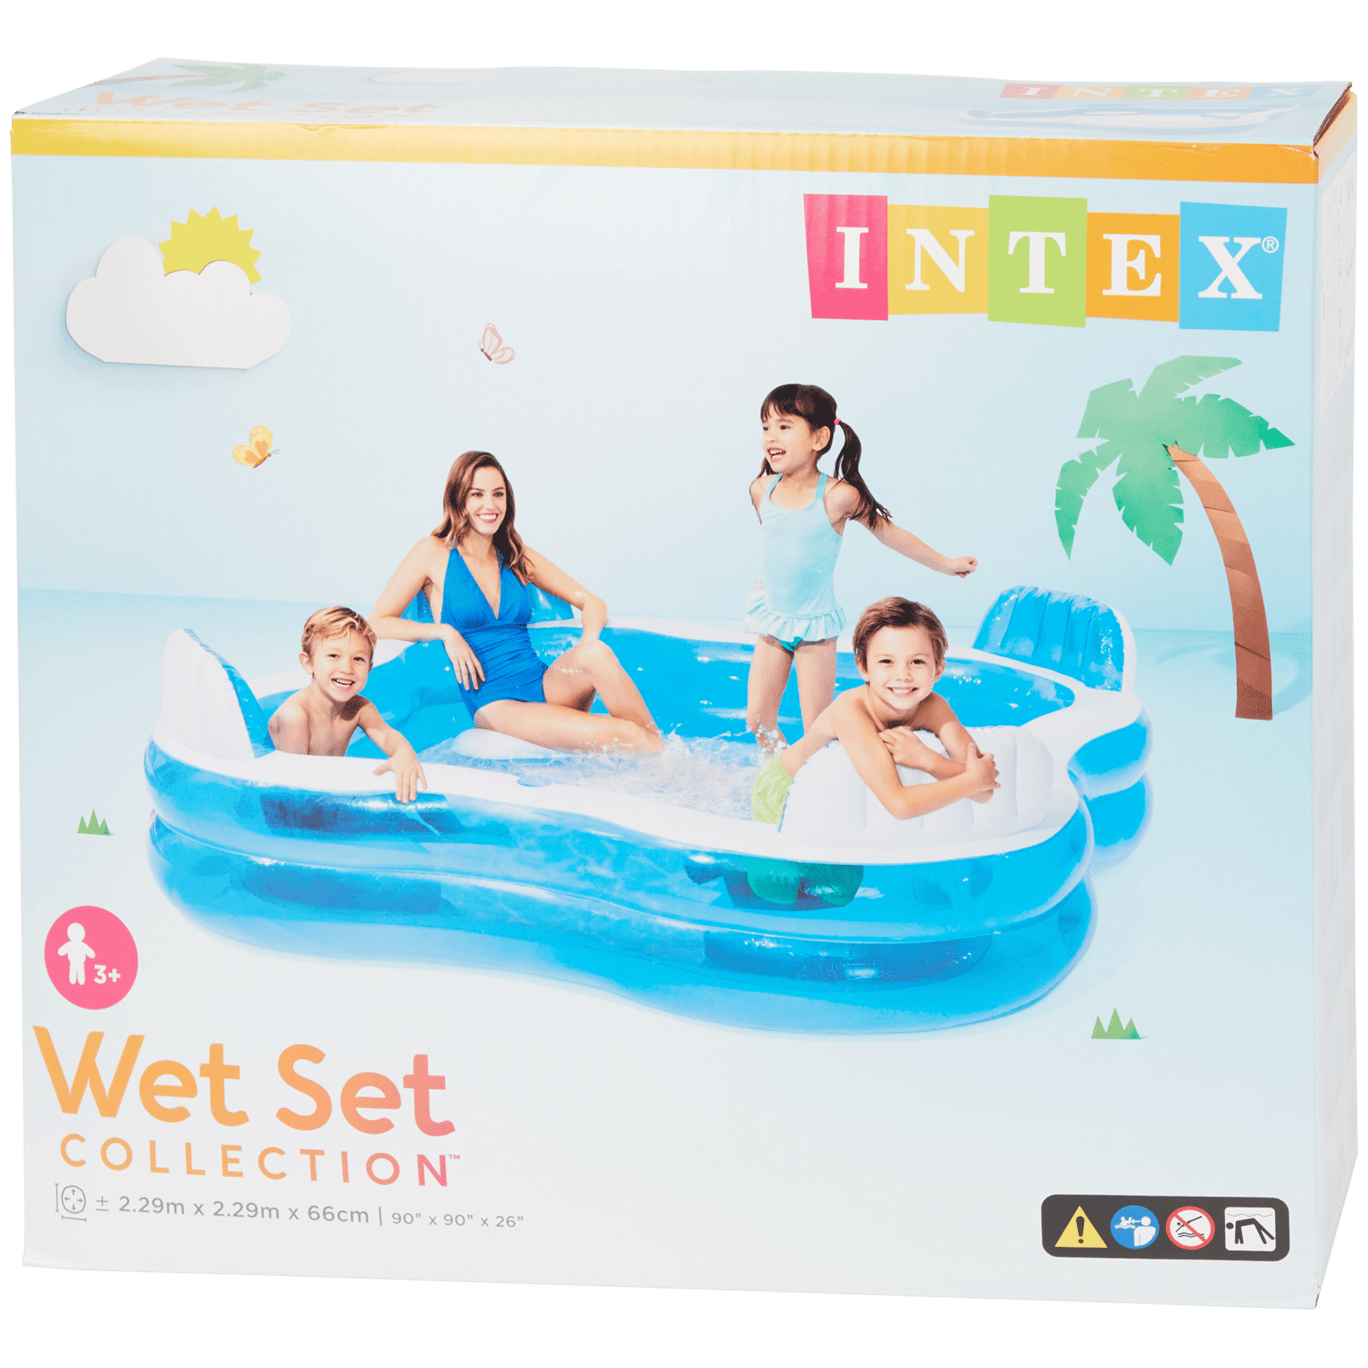 Intex Family | Action.com